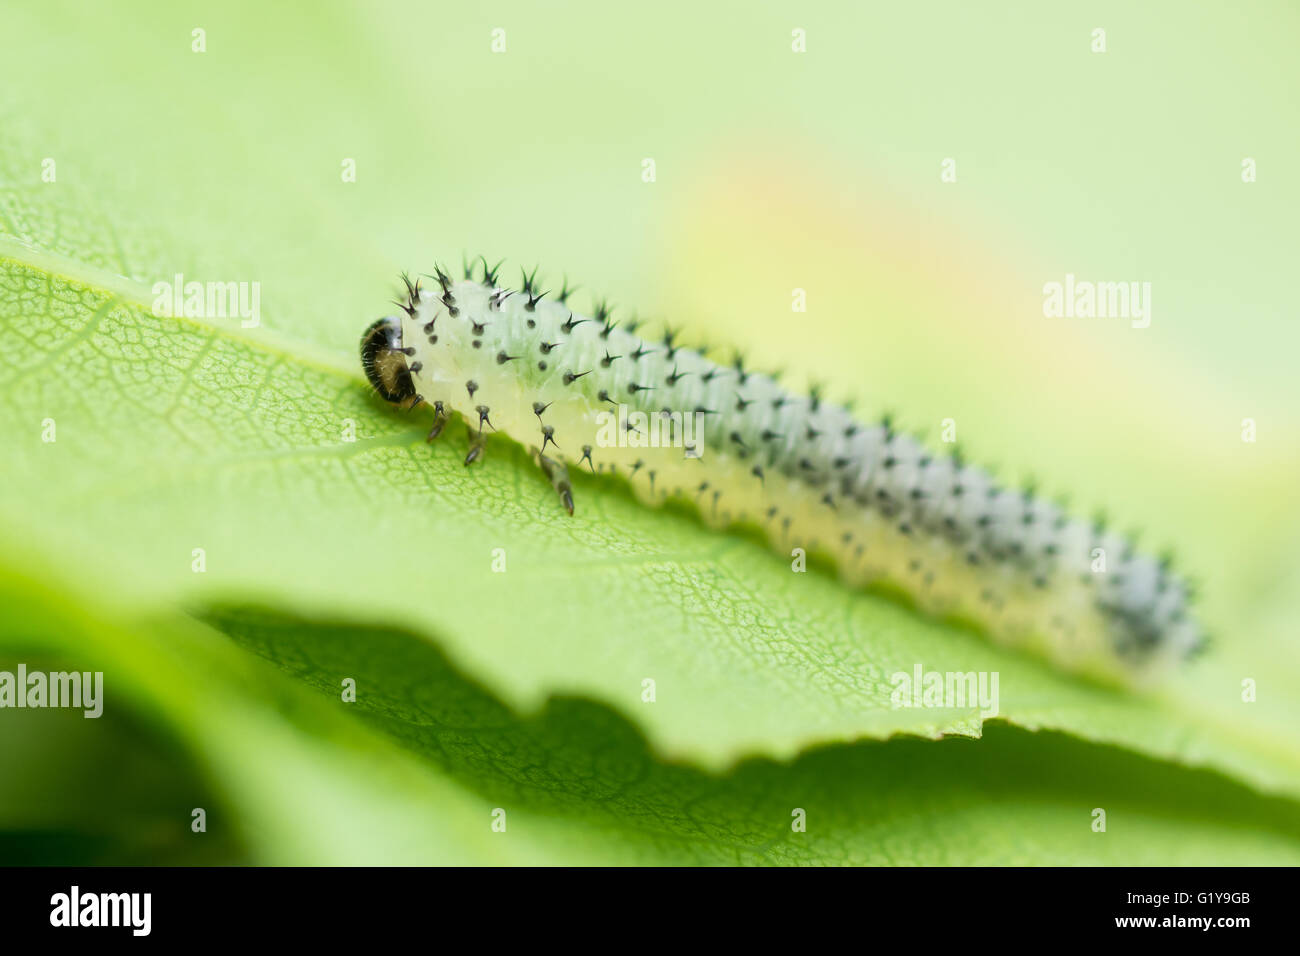 Oak sawfly (Periclista lineolata) larva. Spiky sawfly caterpillar in the family Tenthredinidae feeding on oak tree (Quercus sp.) Stock Photo